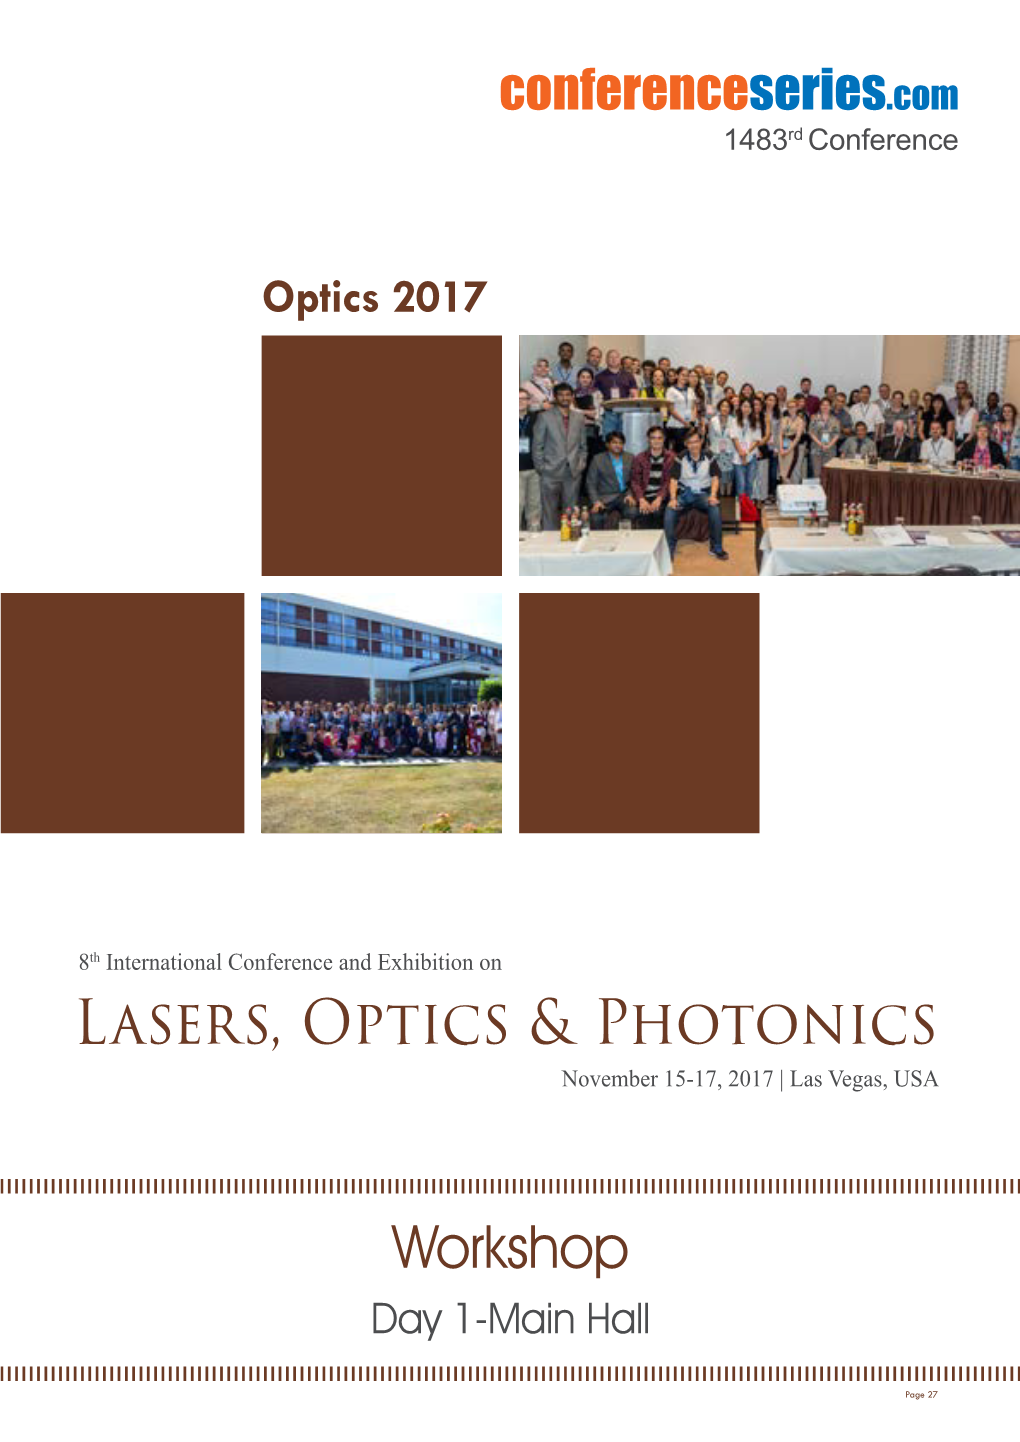 Lasers, Optics & Photonics Workshop